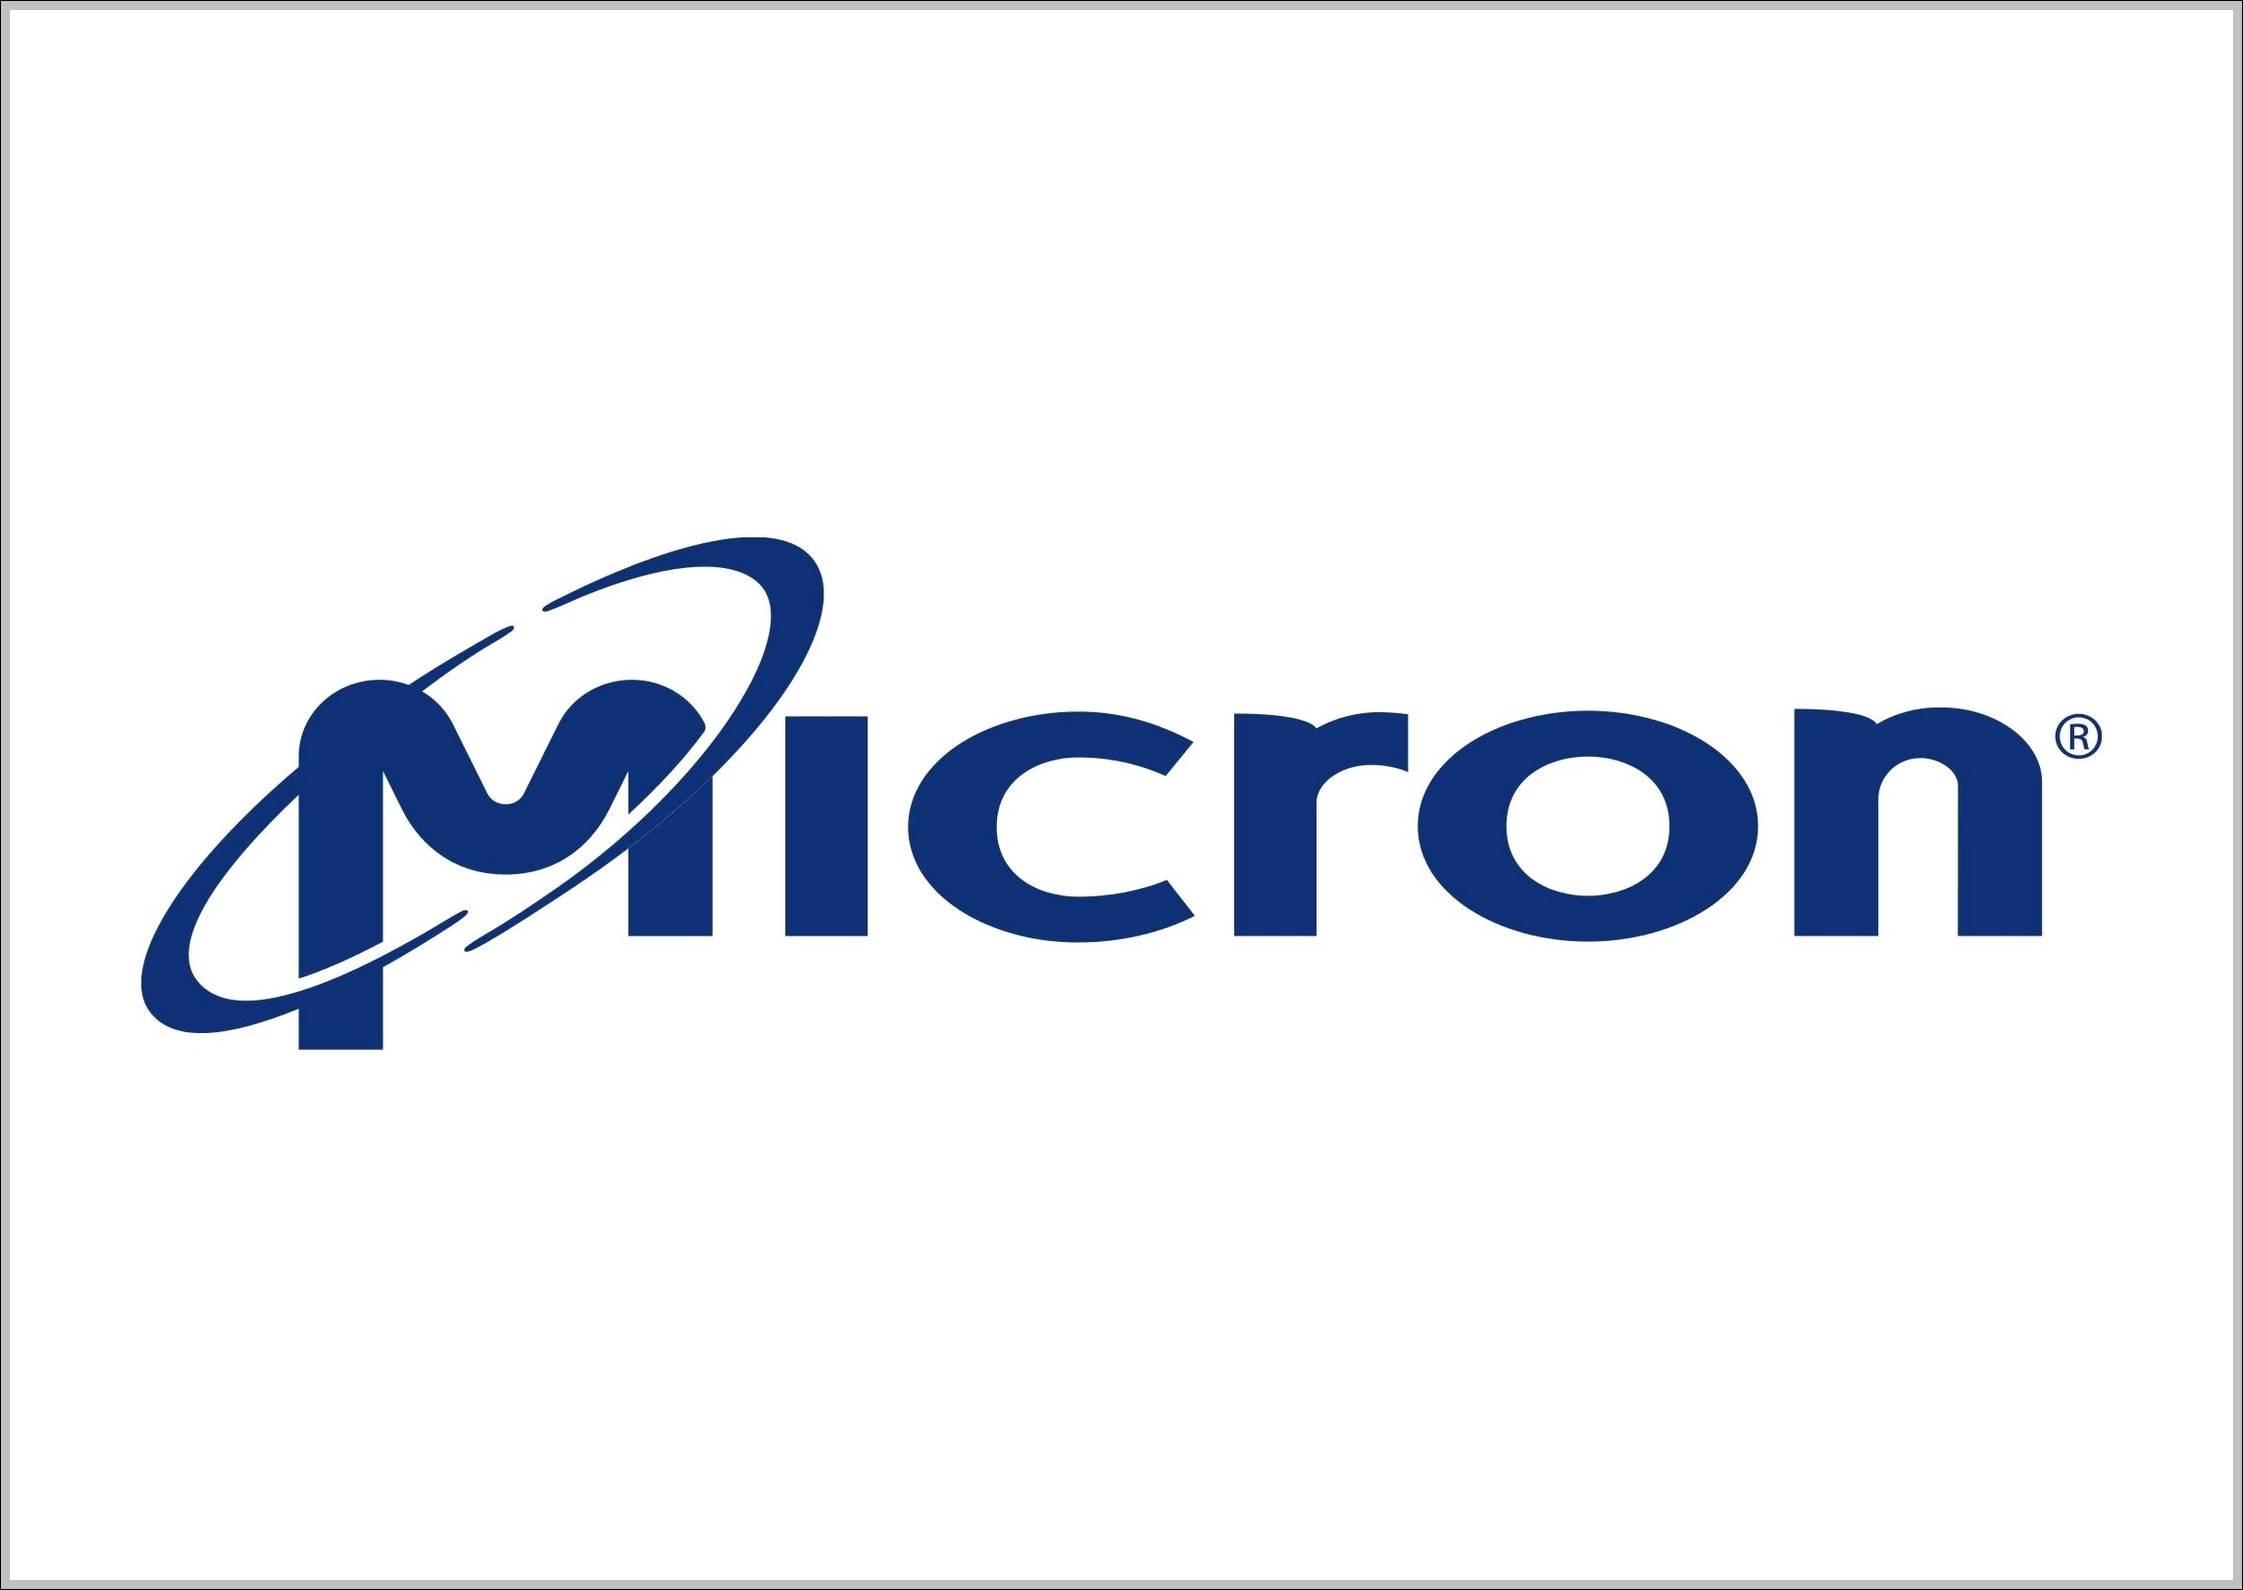 Micron sign